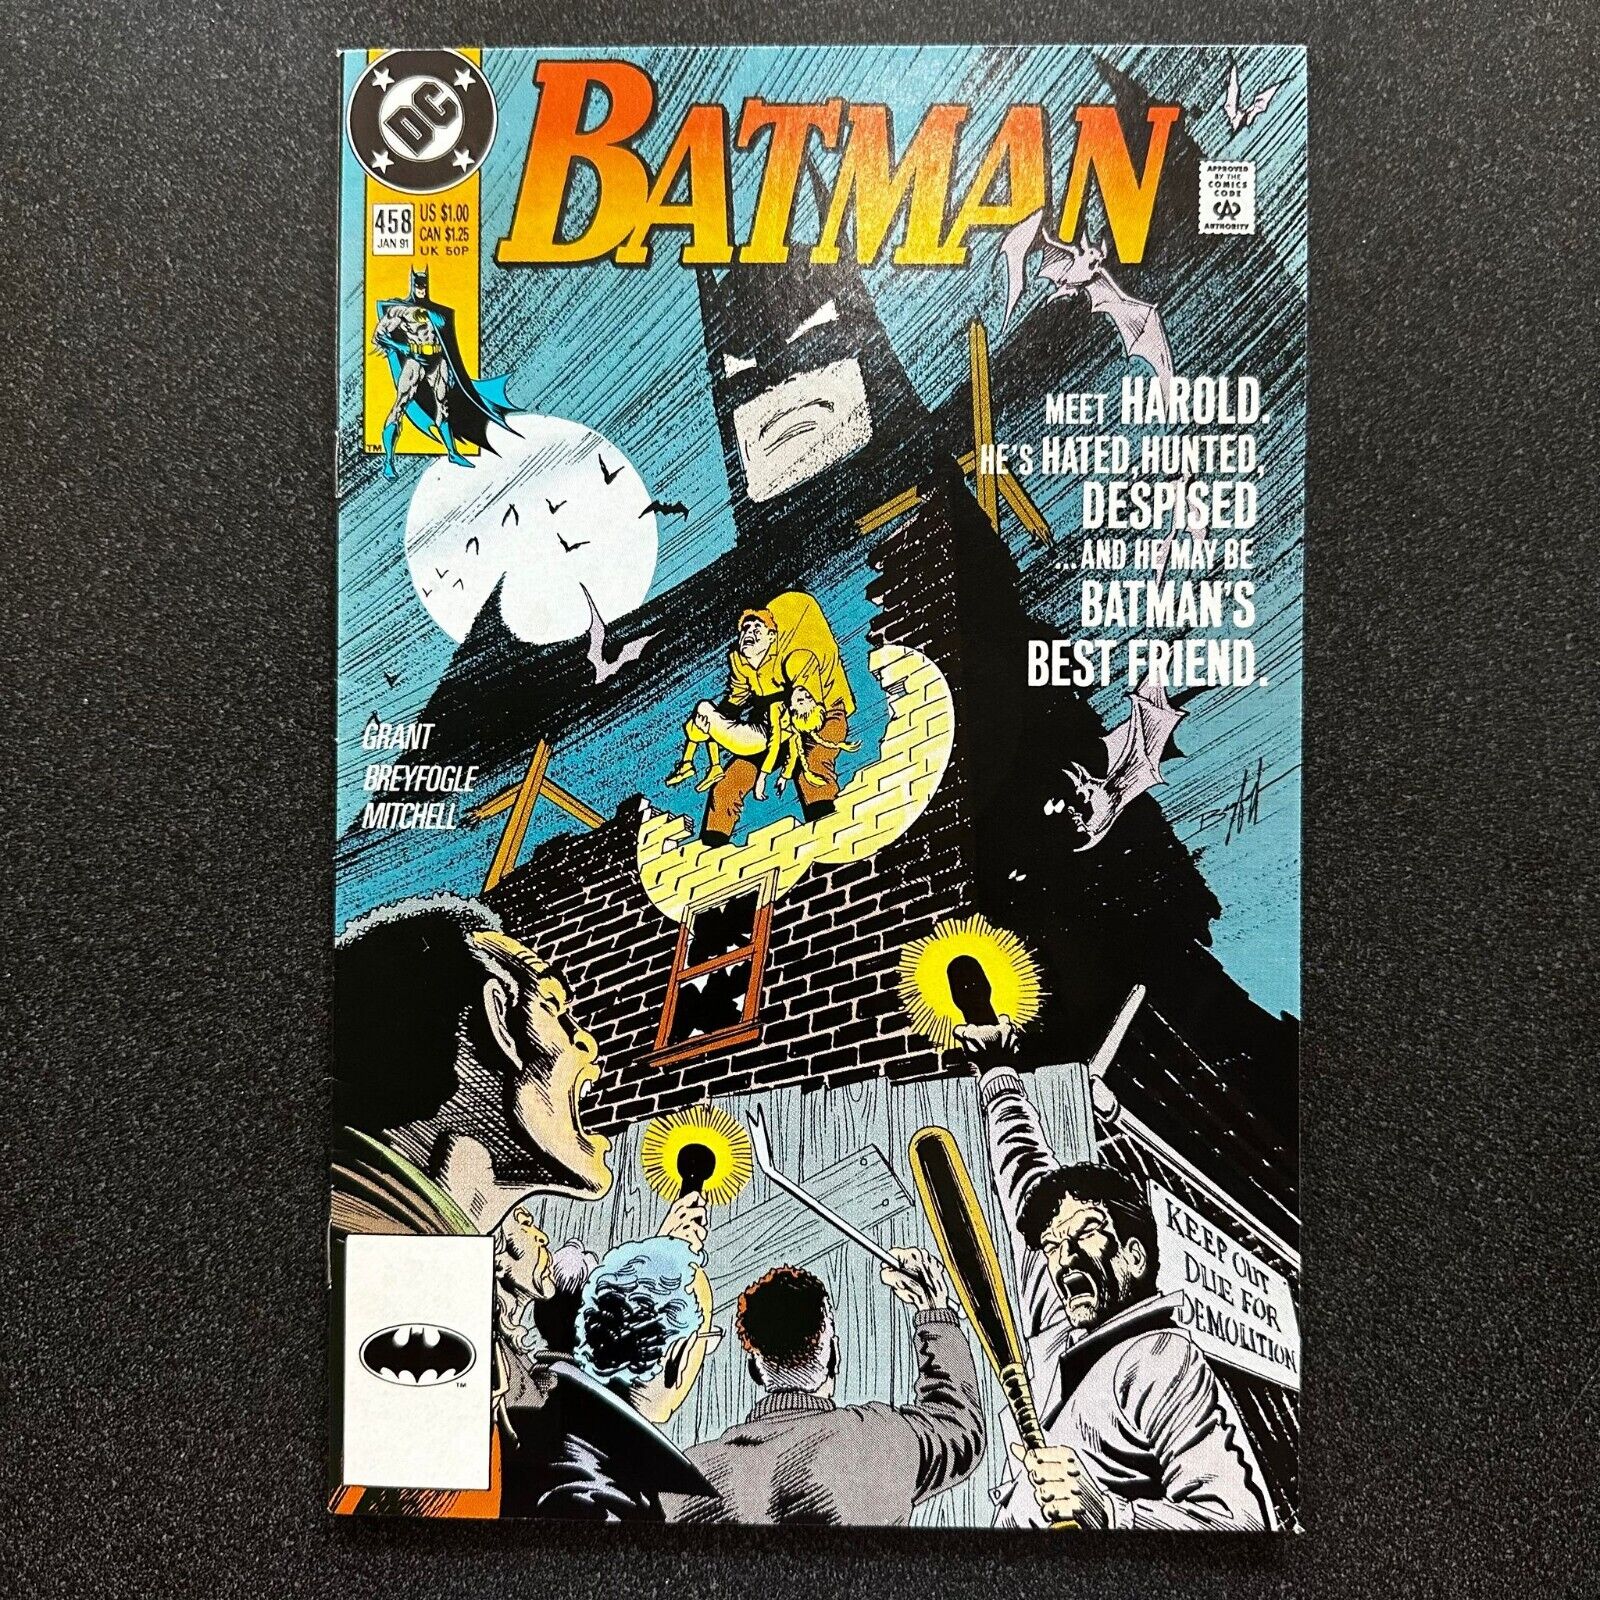 Batman #458D (Jan 1991) • Street Demonz • Alan Grant story • Norm Breyfogle art